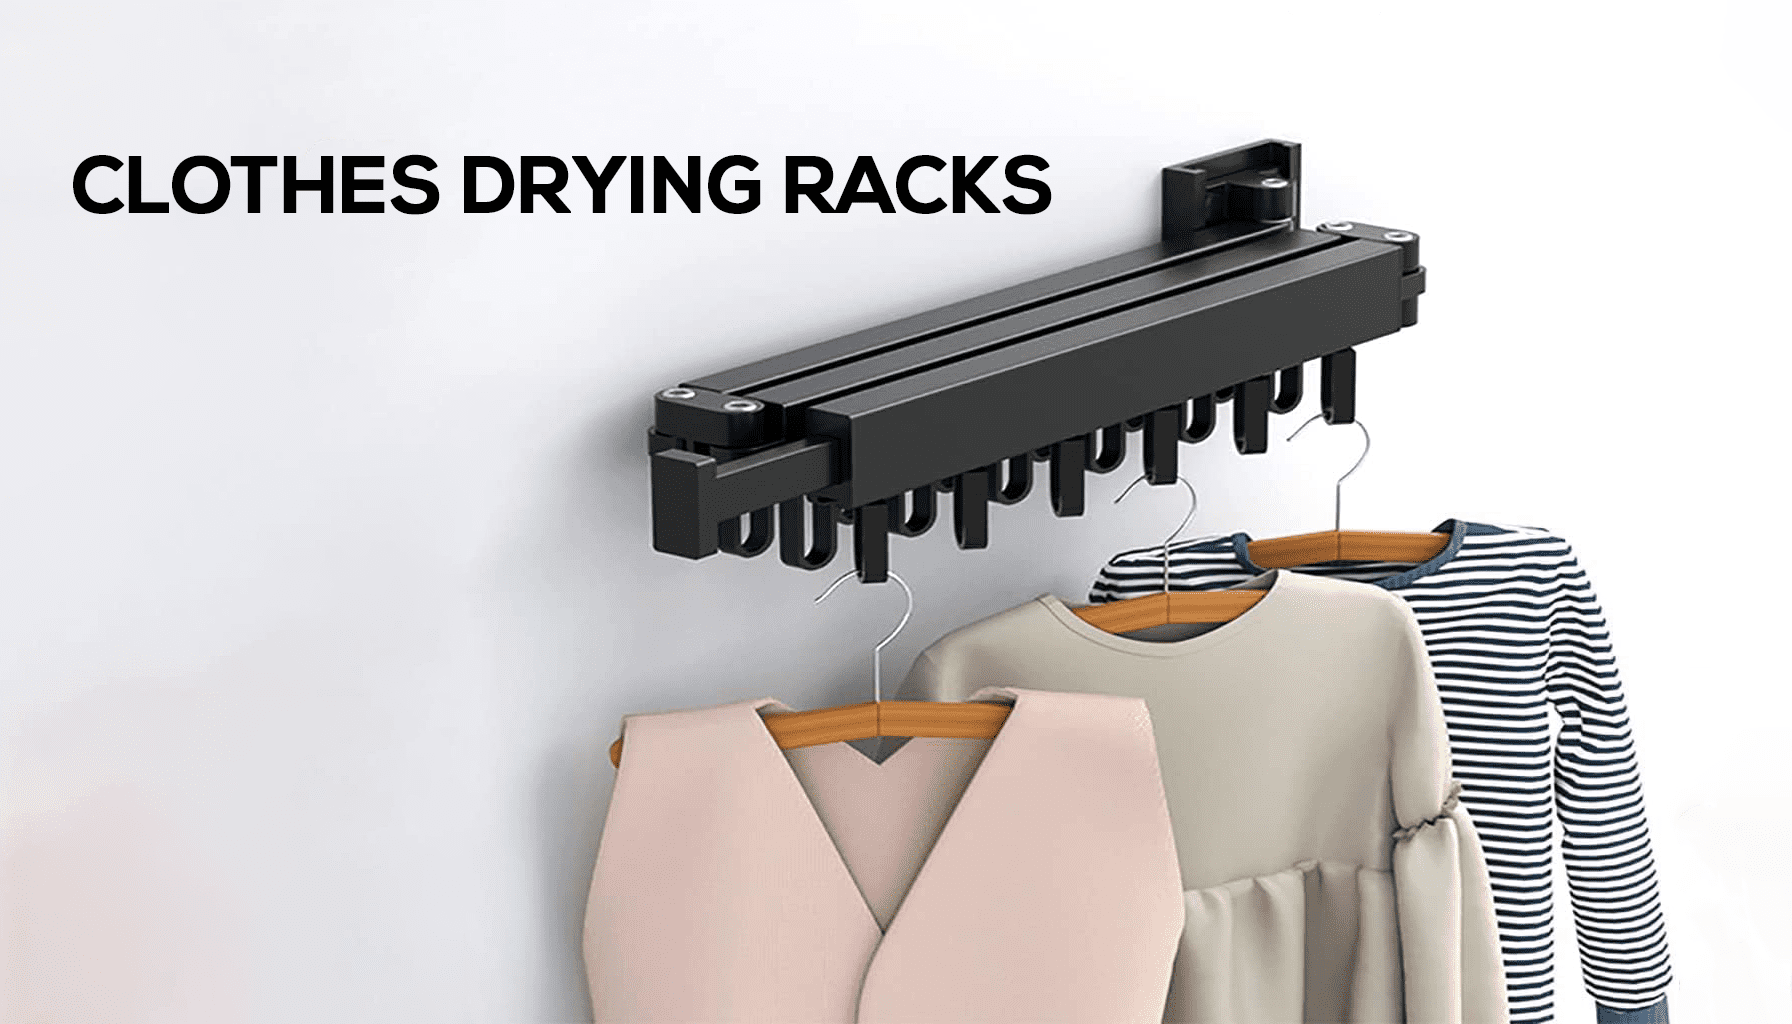 Clothes drying racks